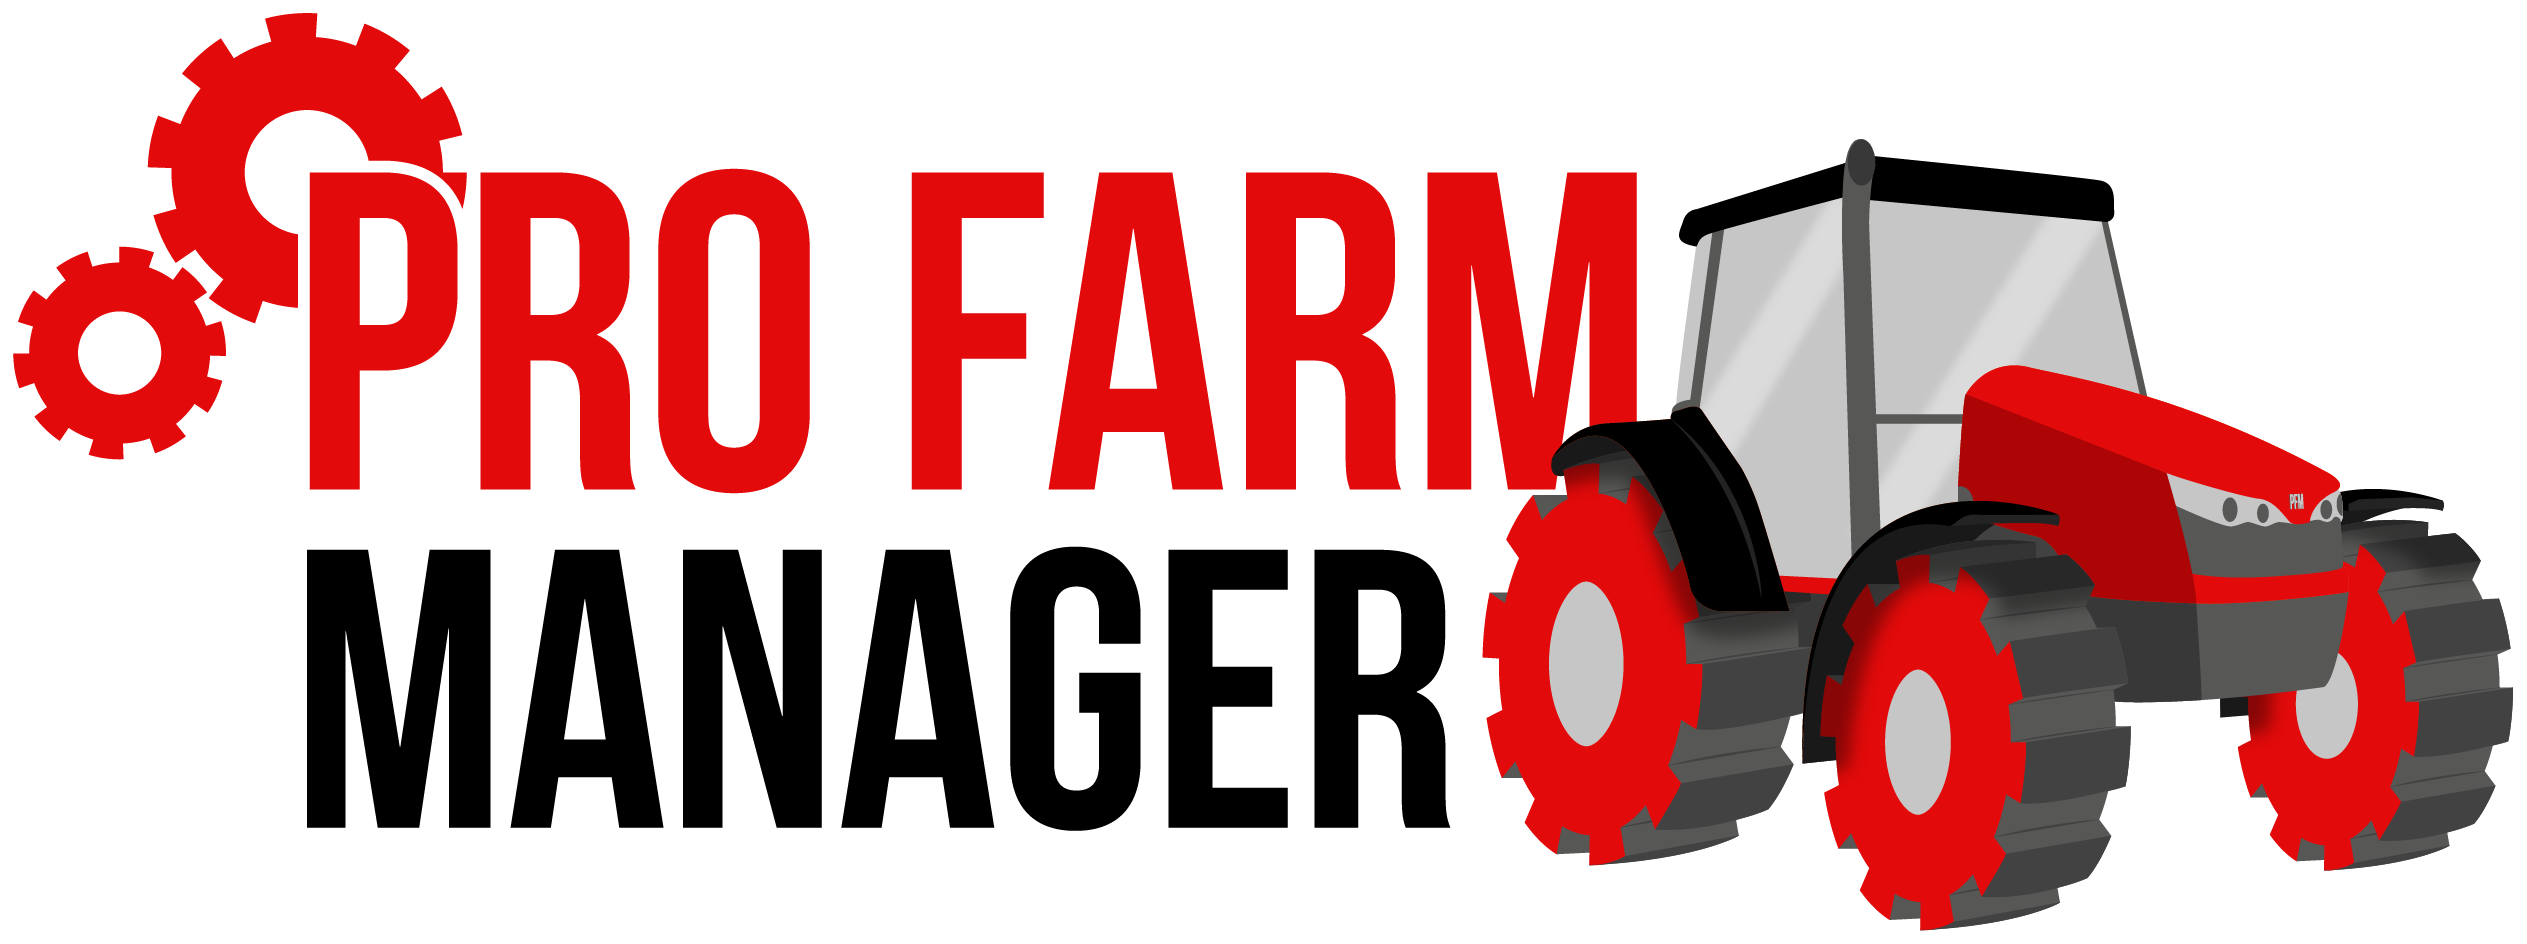 Pro-Farm-Manager-logo